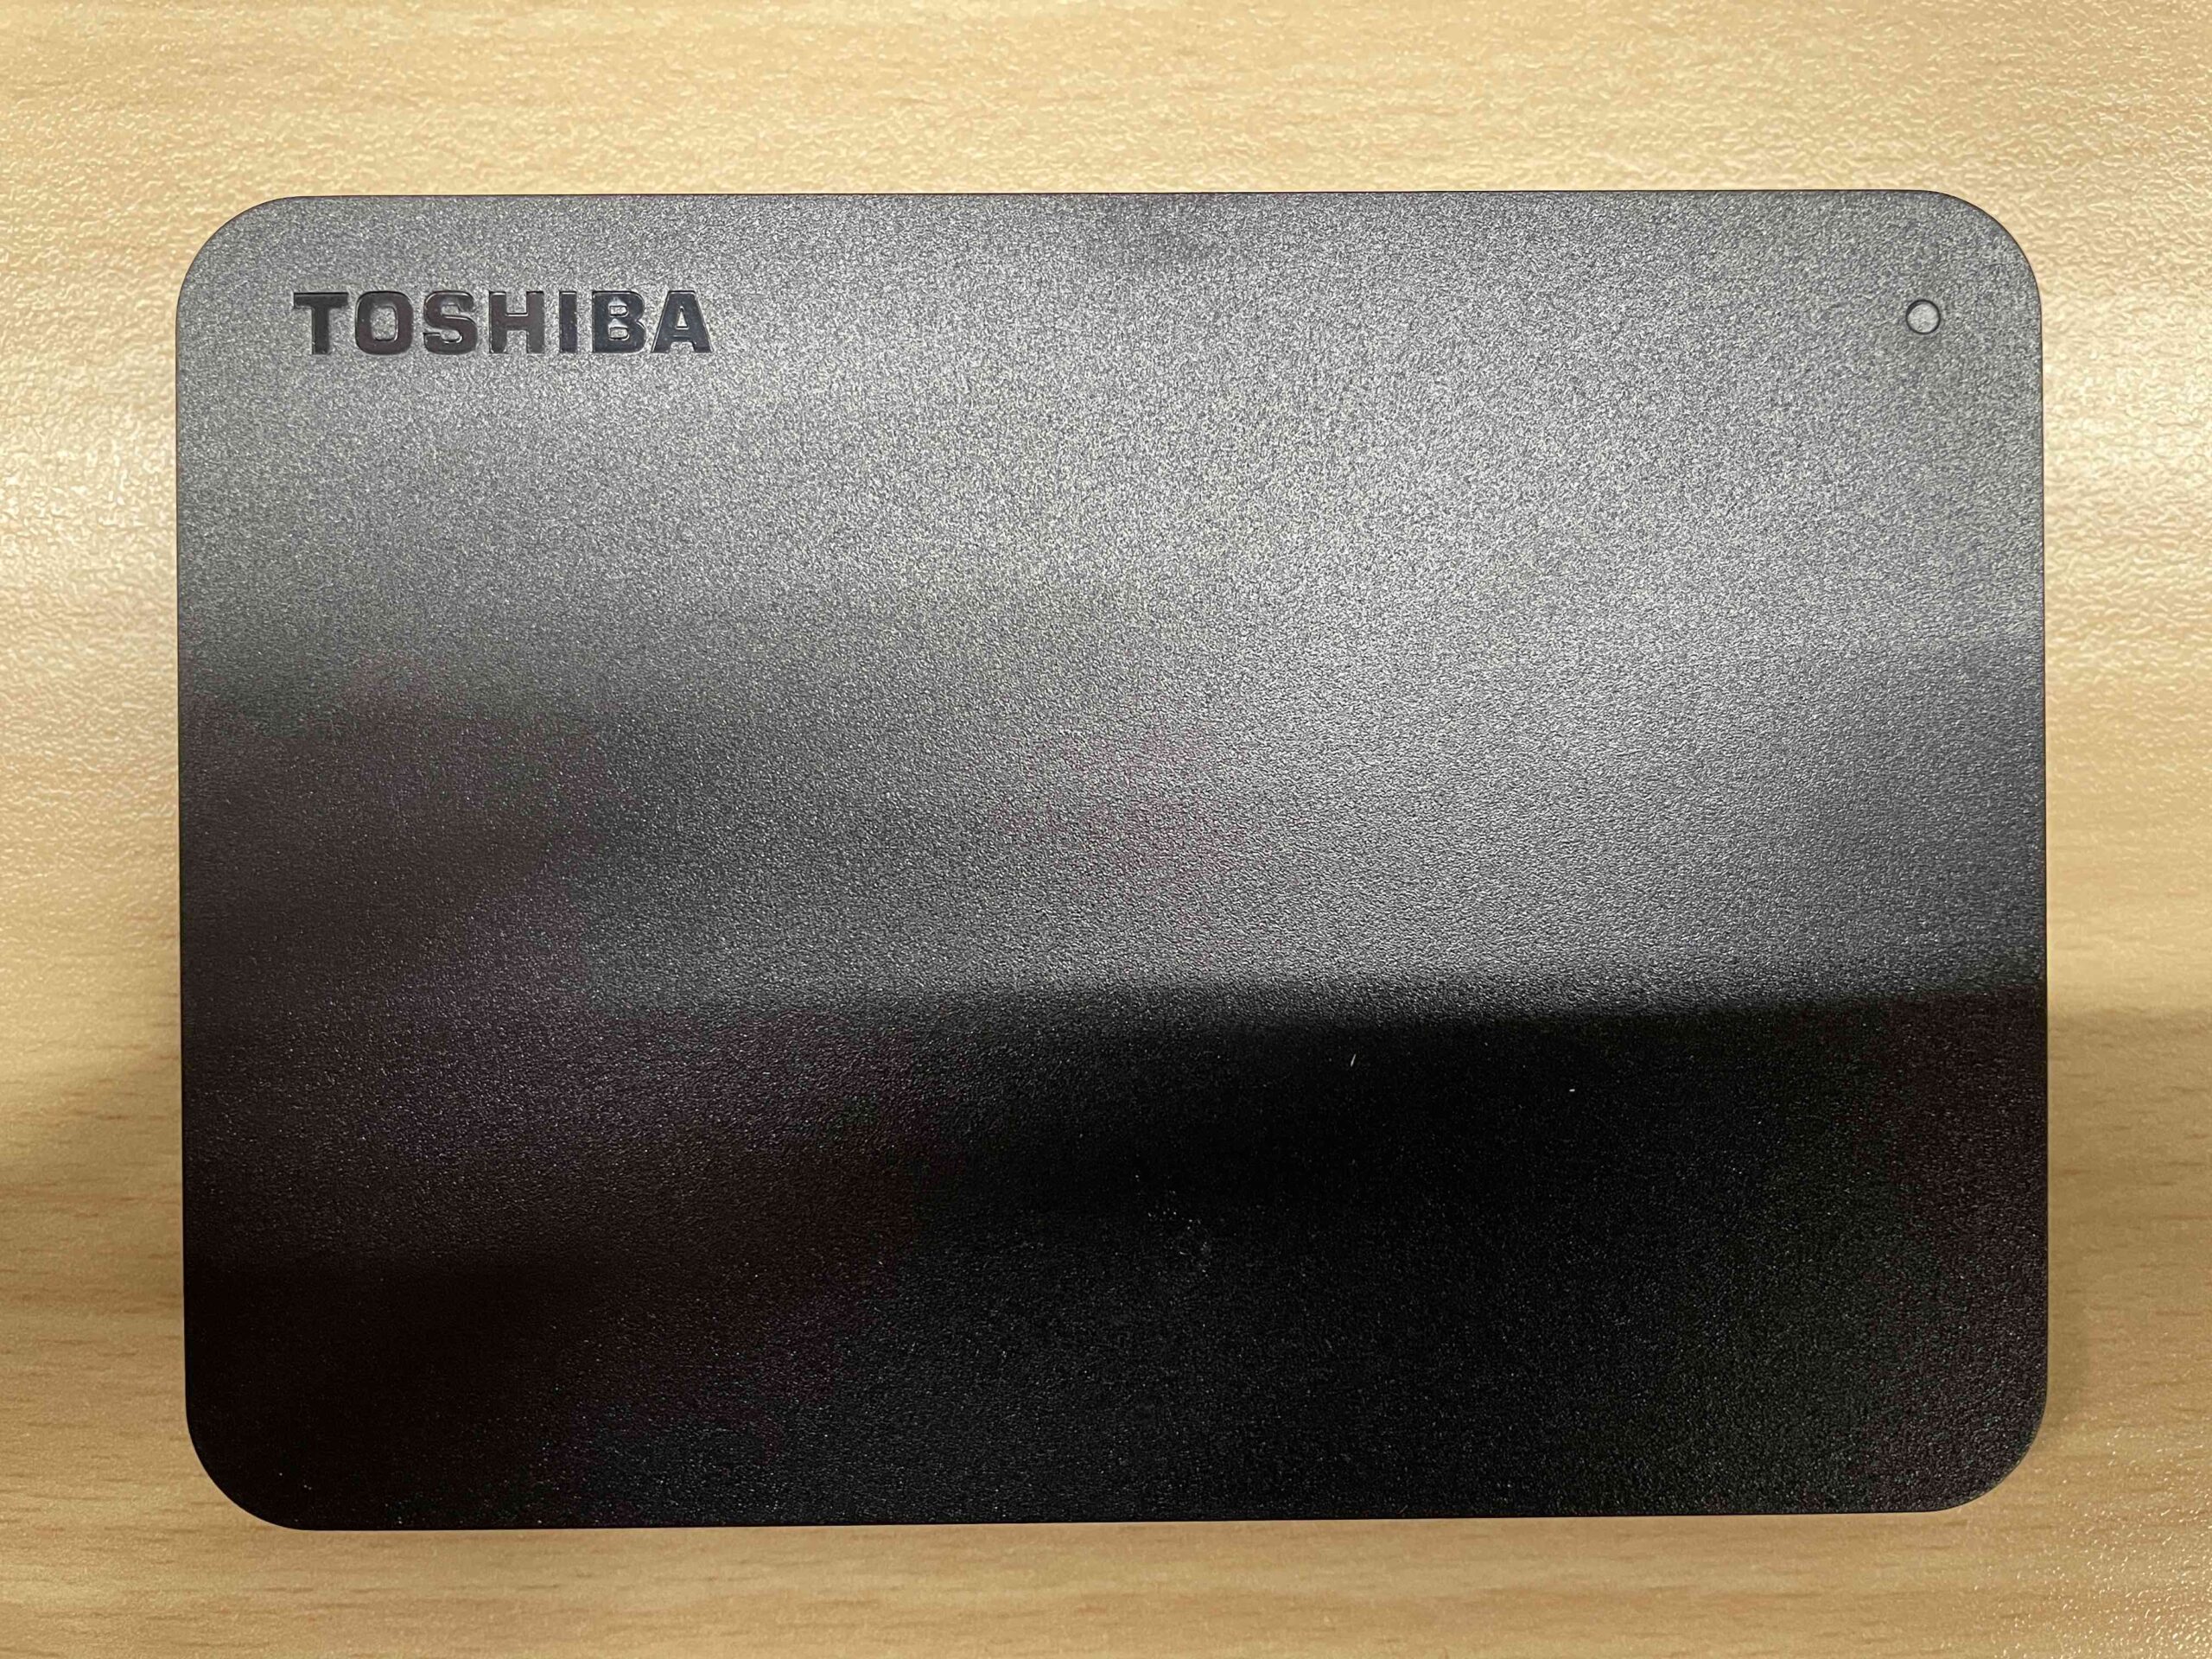 TOSHIBA DTB420 2TB